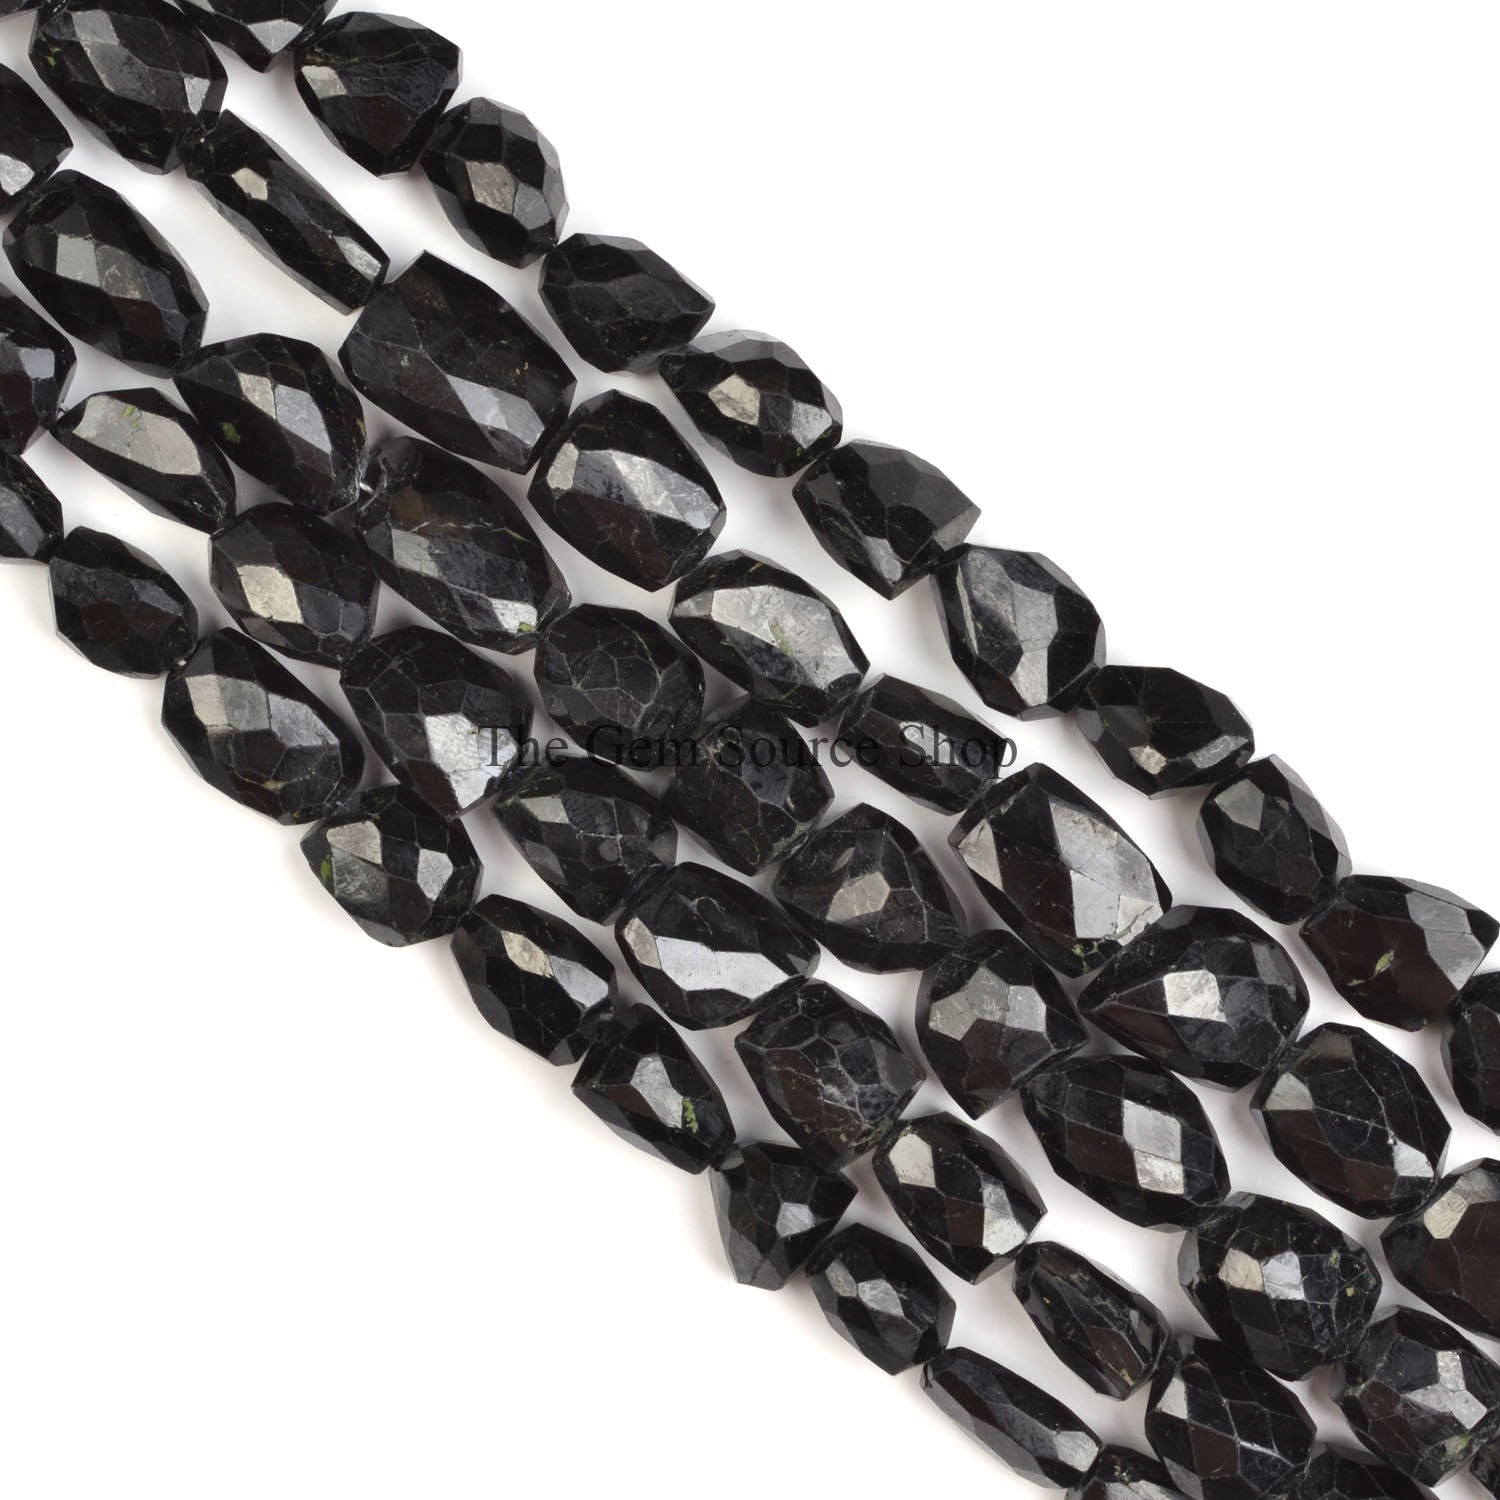 Black Tourmaline Beads, Black Tourmaline Nugget Shape Beads, Black Tourmaline Faceted Beads, Black Tourmaline Gemstone Beads